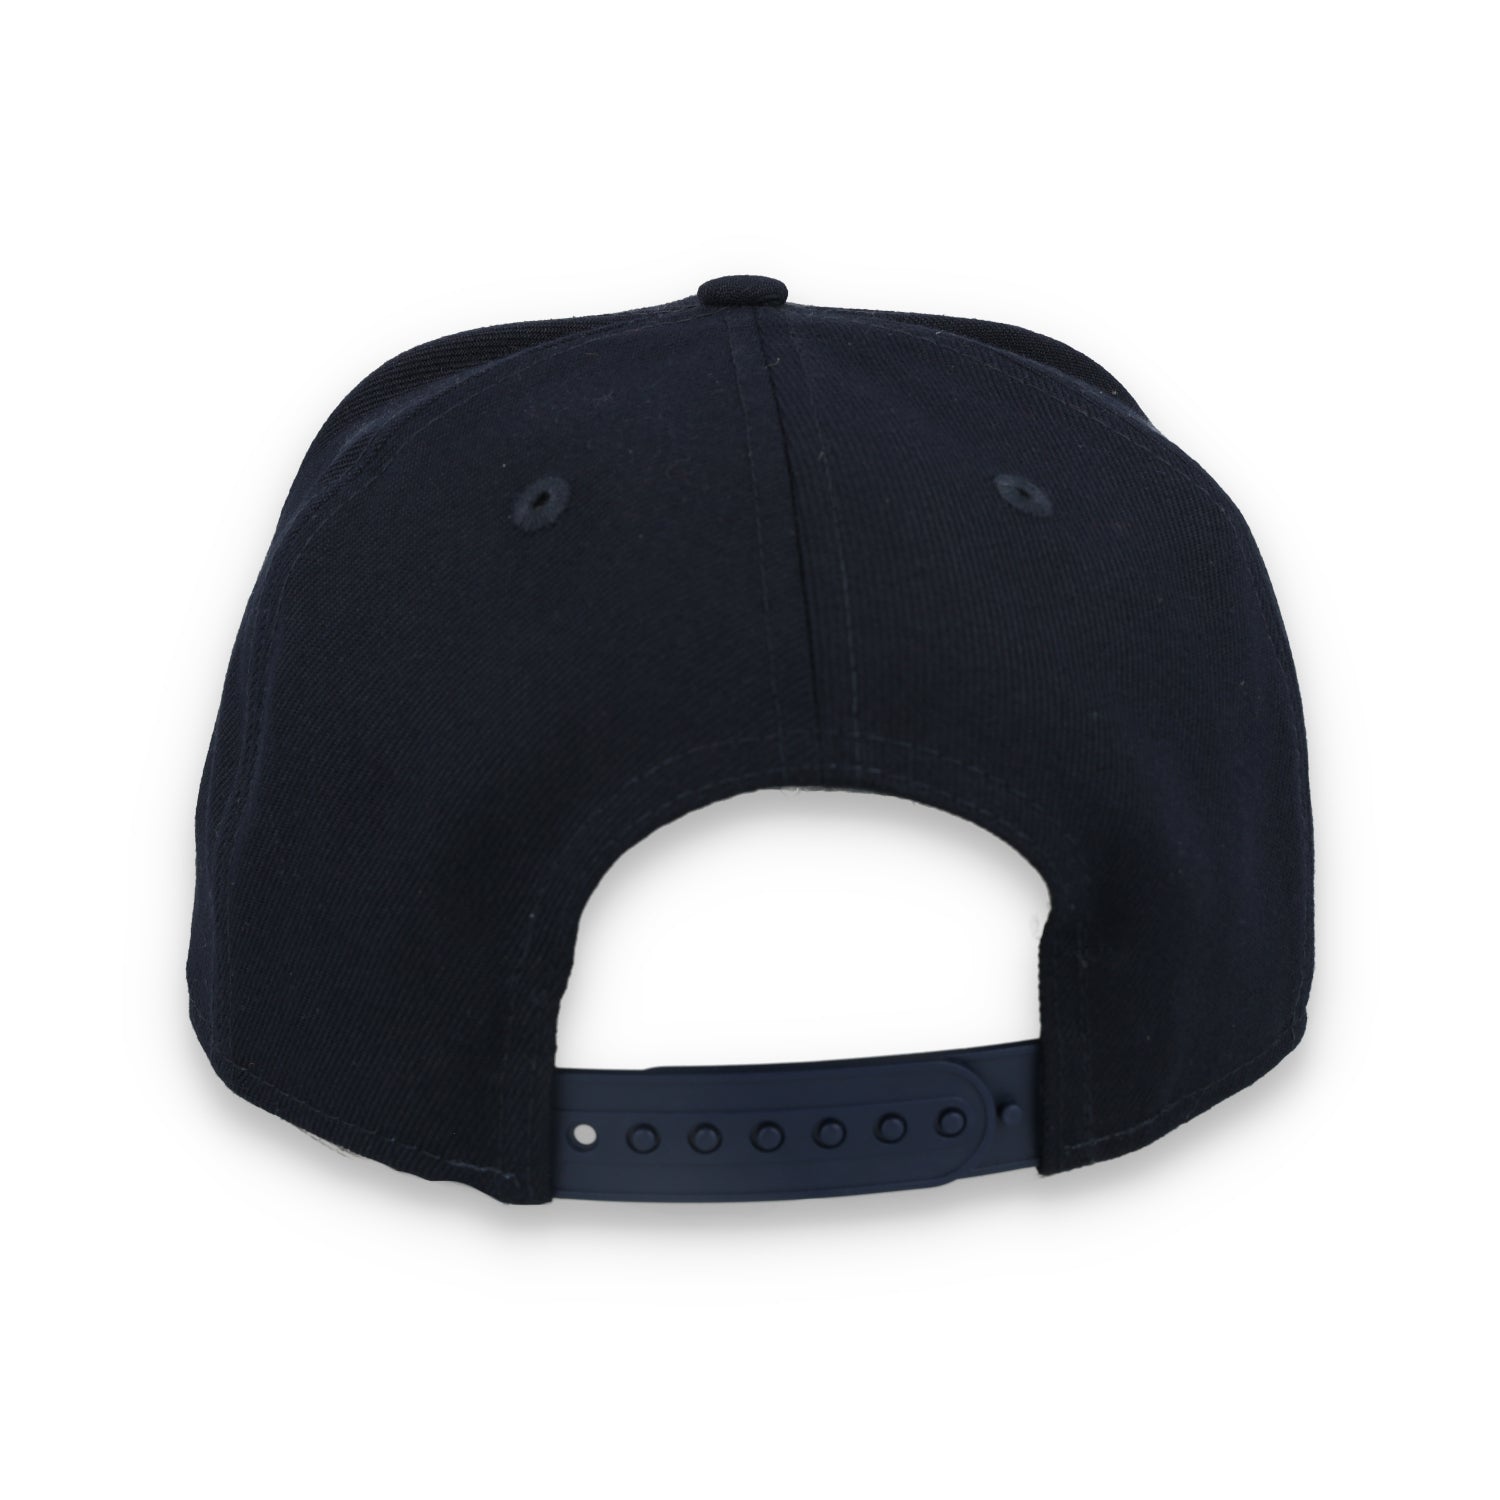 New Era Houston Astros ON FIELD Alternative 9FIFTY Snapback Hat